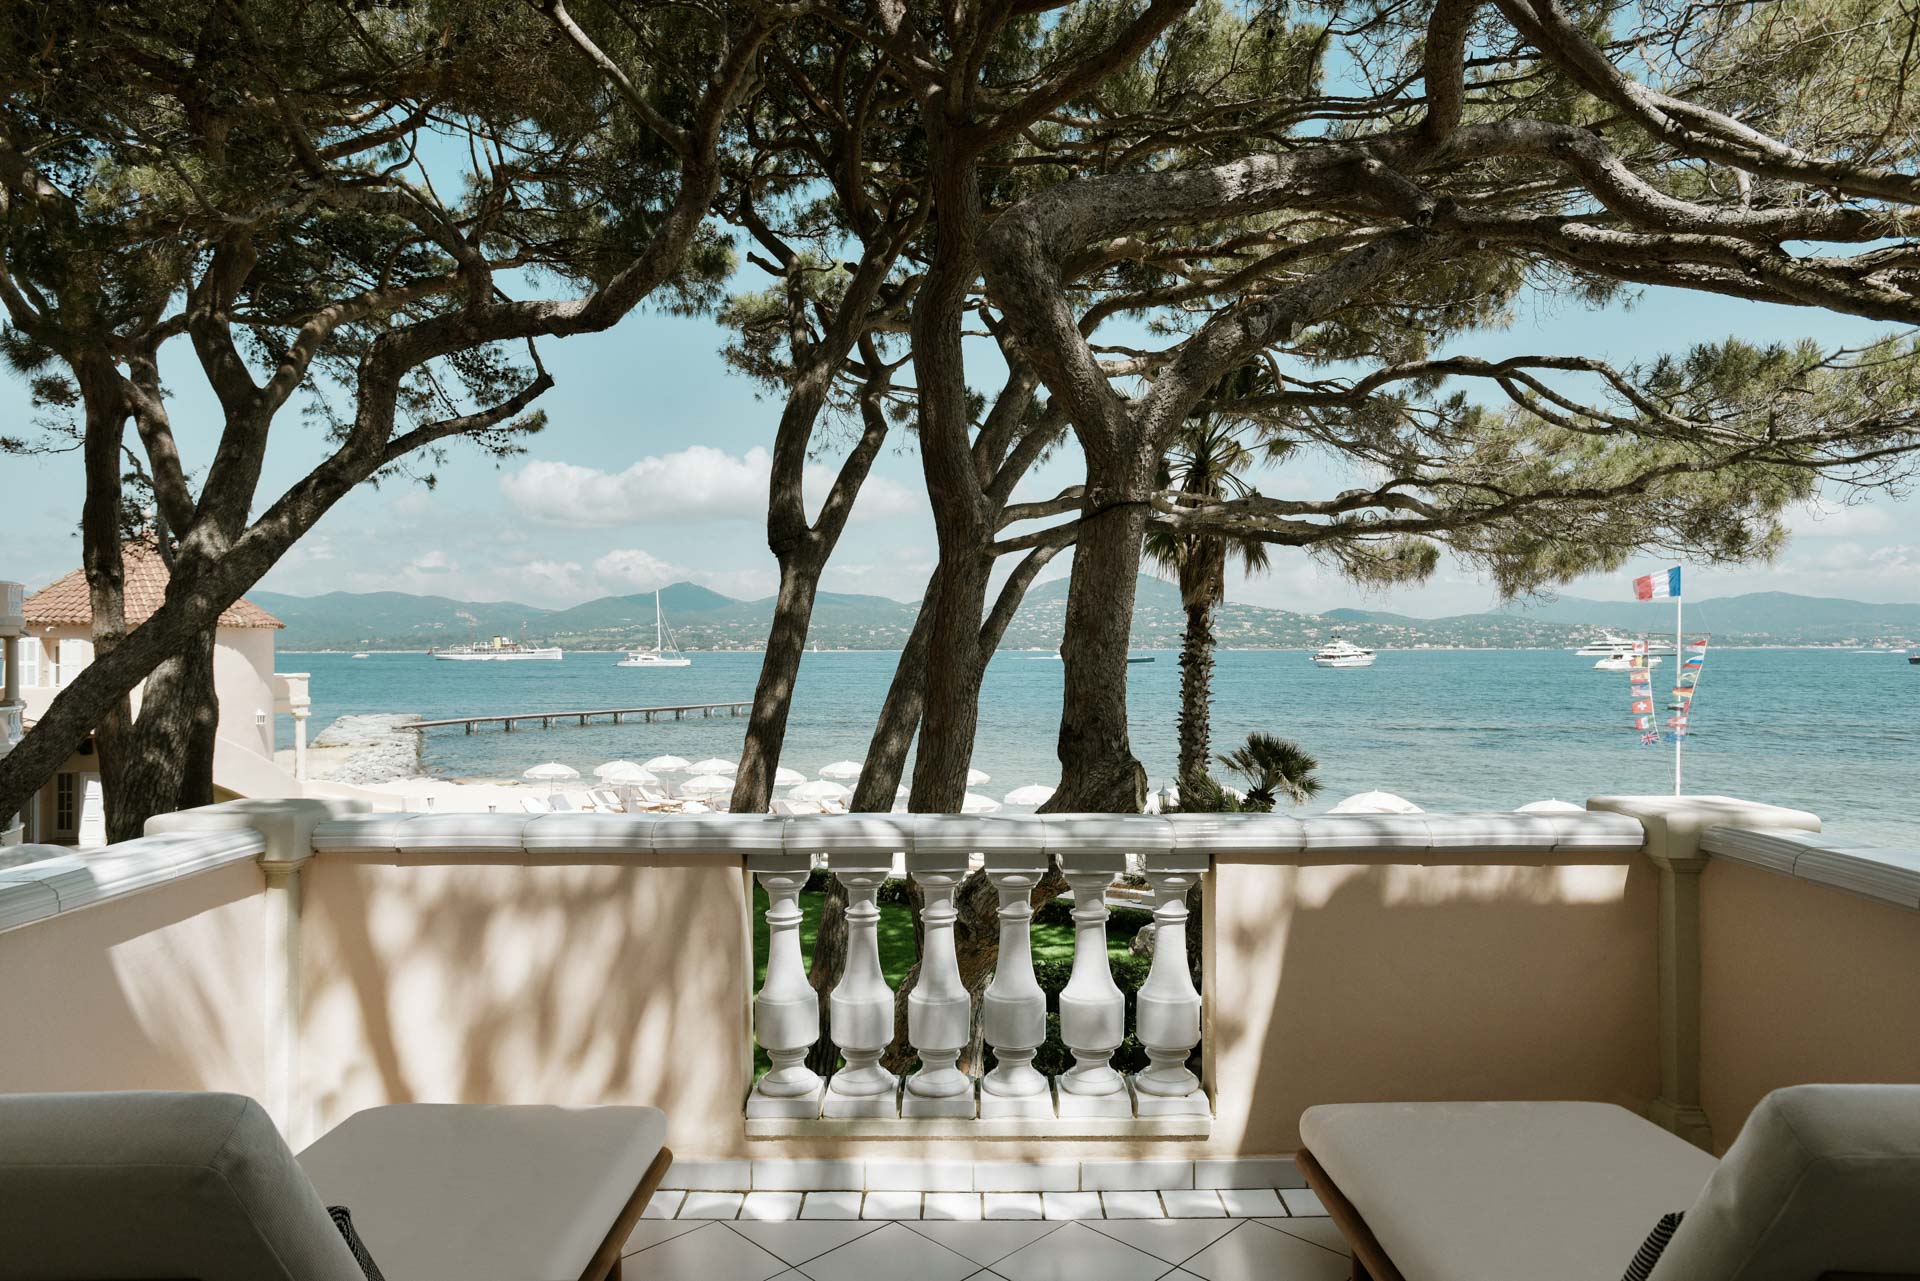 priceless™  Cheval Blanc St-Tropez: In Saint-Tropez, France